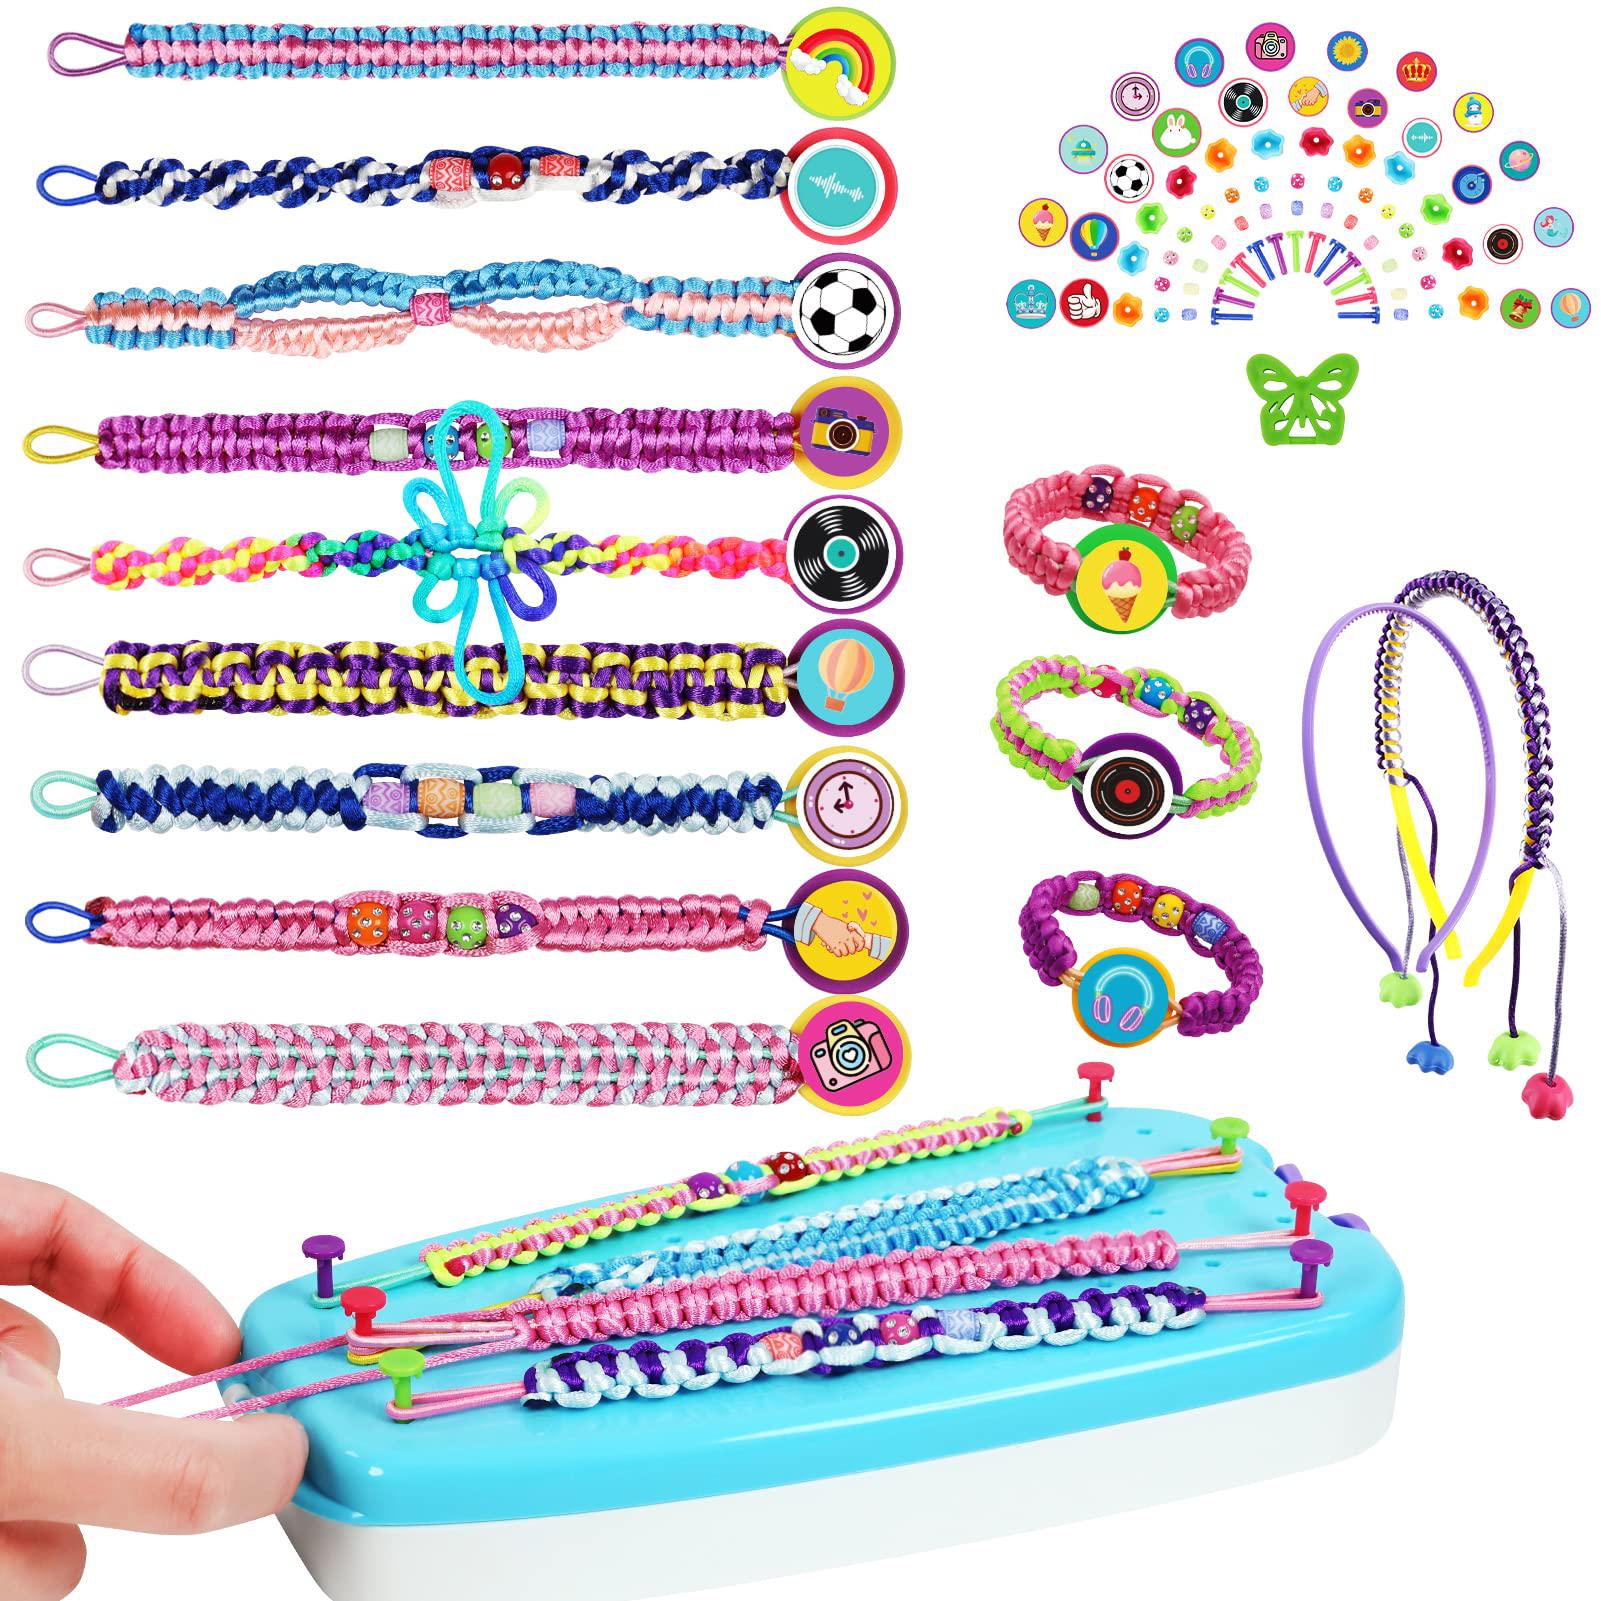 funbud friendship bracelet making kit for teen girls - arts and crafts  ideas for kids age 6